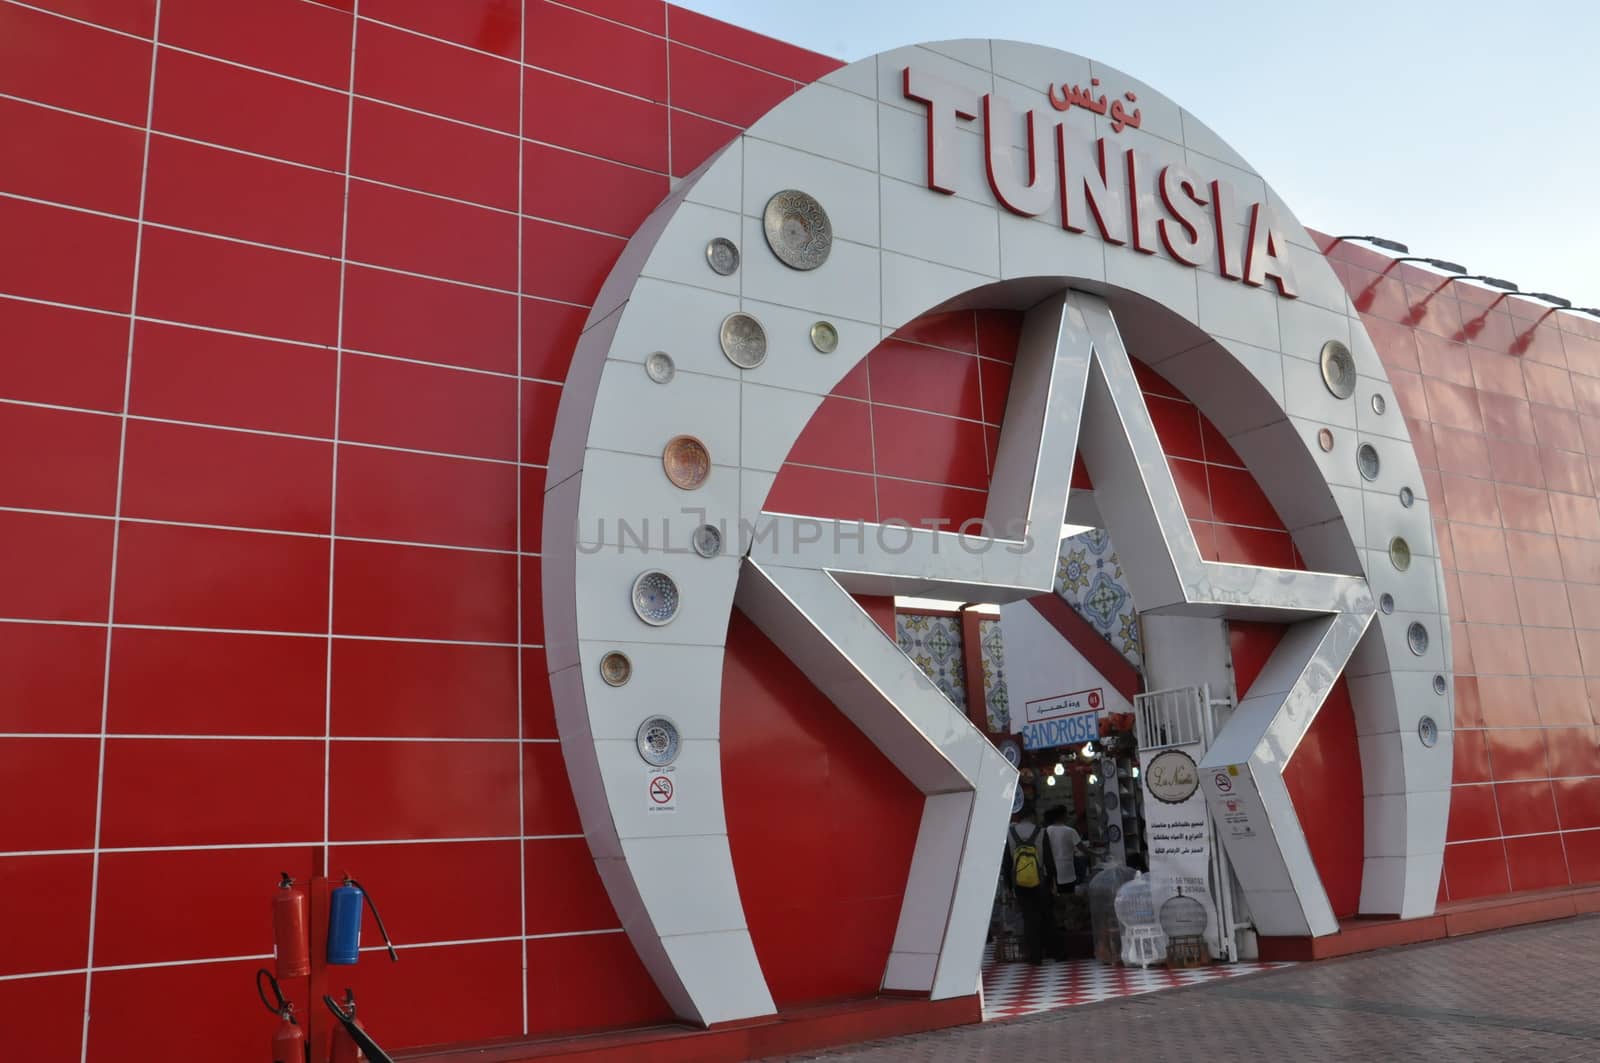 Tunisia pavilion at Global Village in Dubai, UAE by sainaniritu